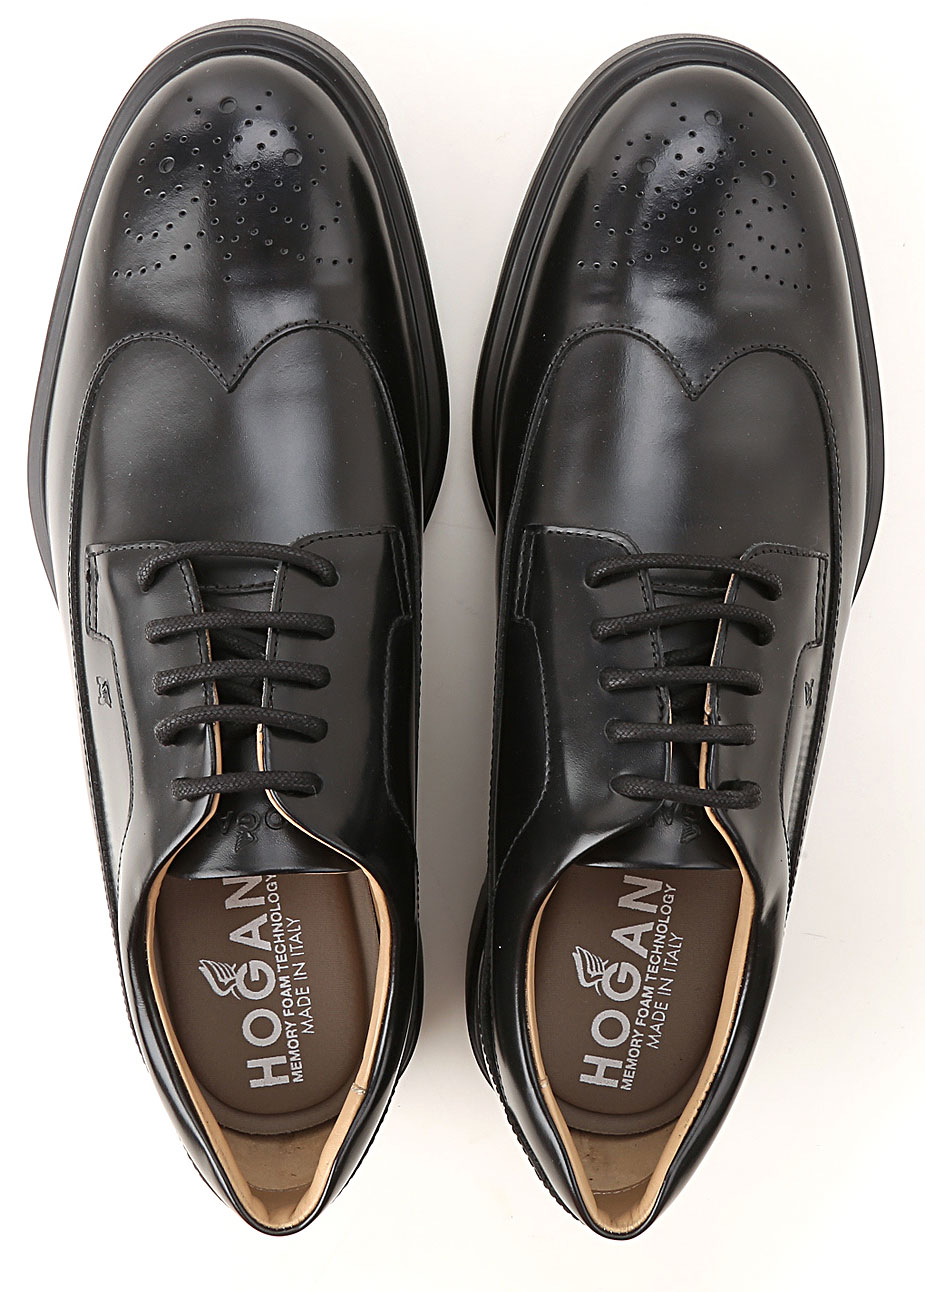 Mens Shoes Hogan, Style code: hxm3930bh706q6b999--